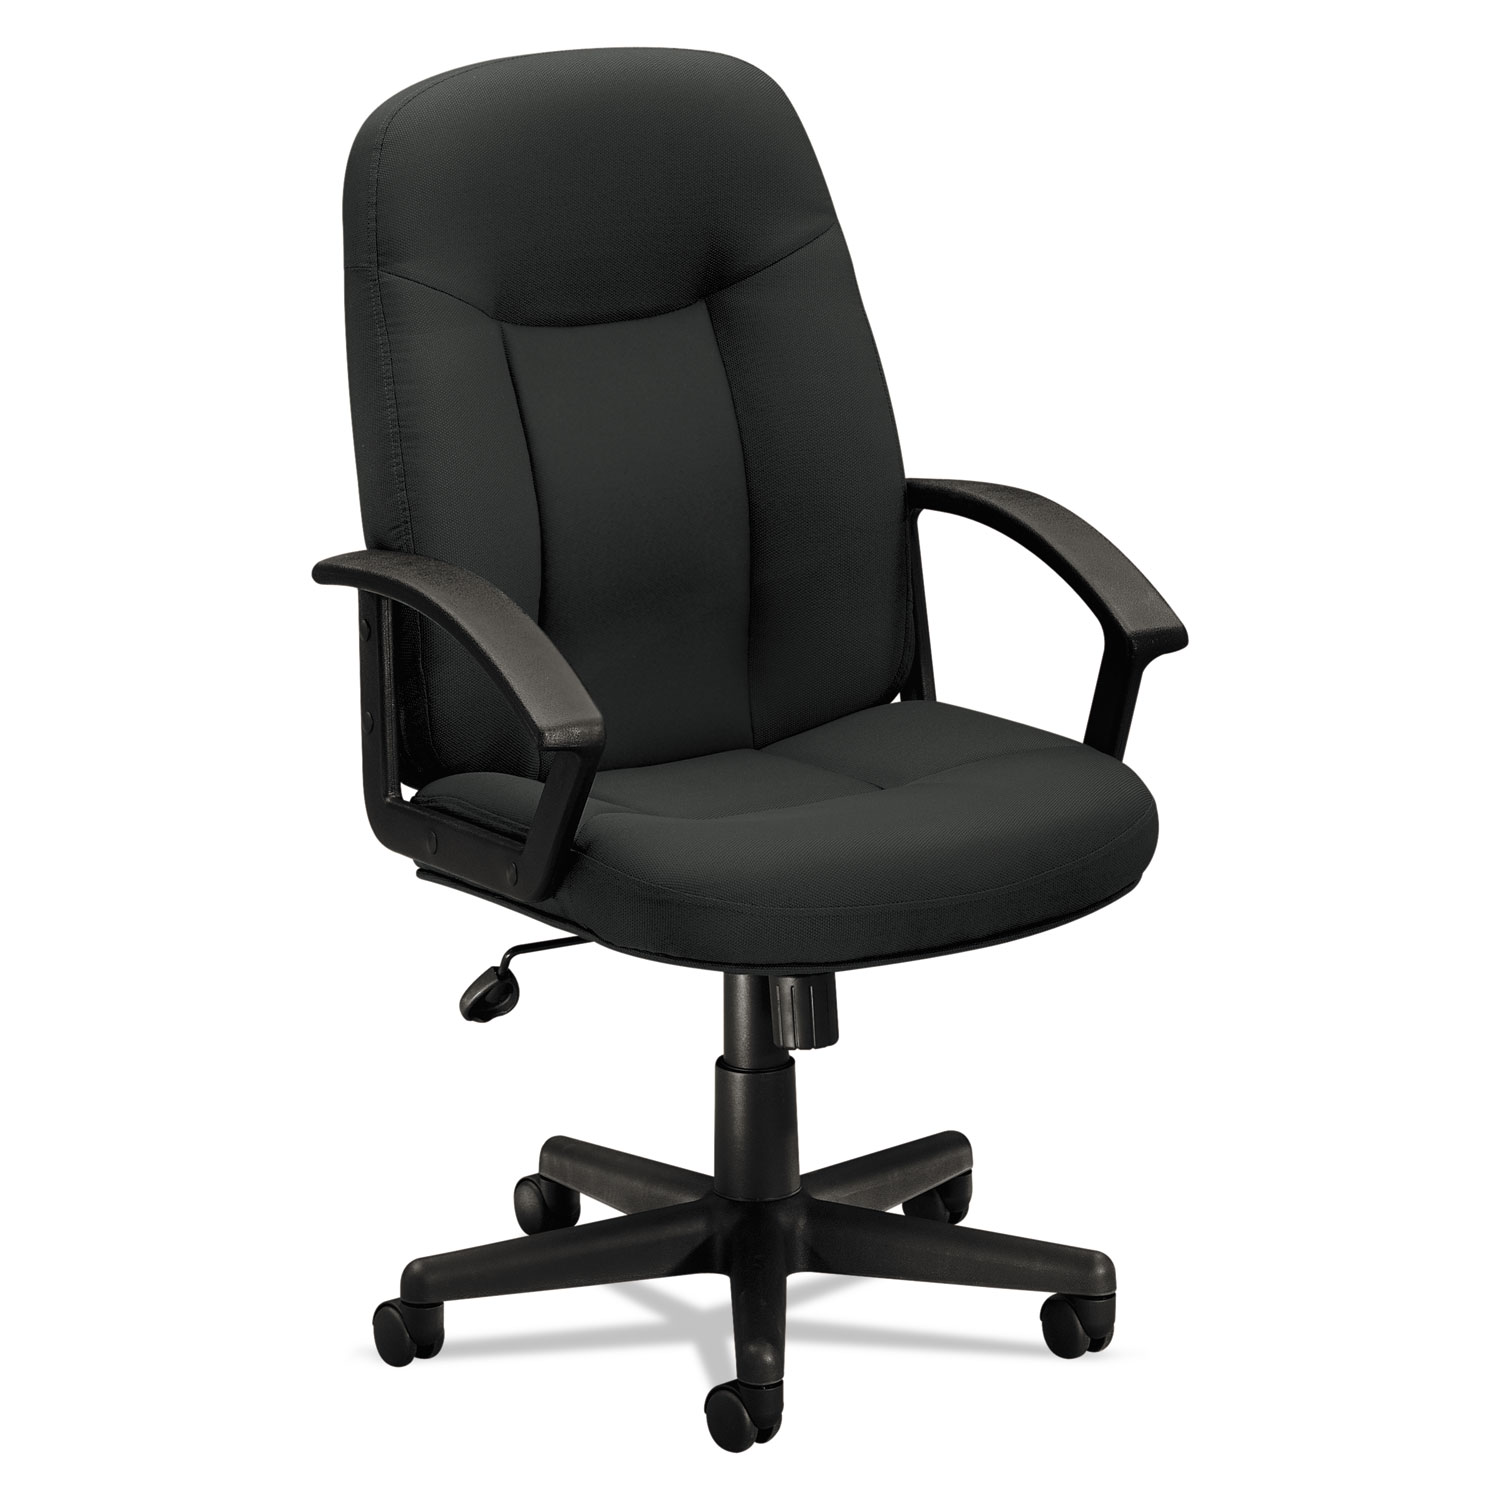 VL601 Series Executive High-Back Swivel/Tilt Chair, Charcoal Fabric/Black Frame